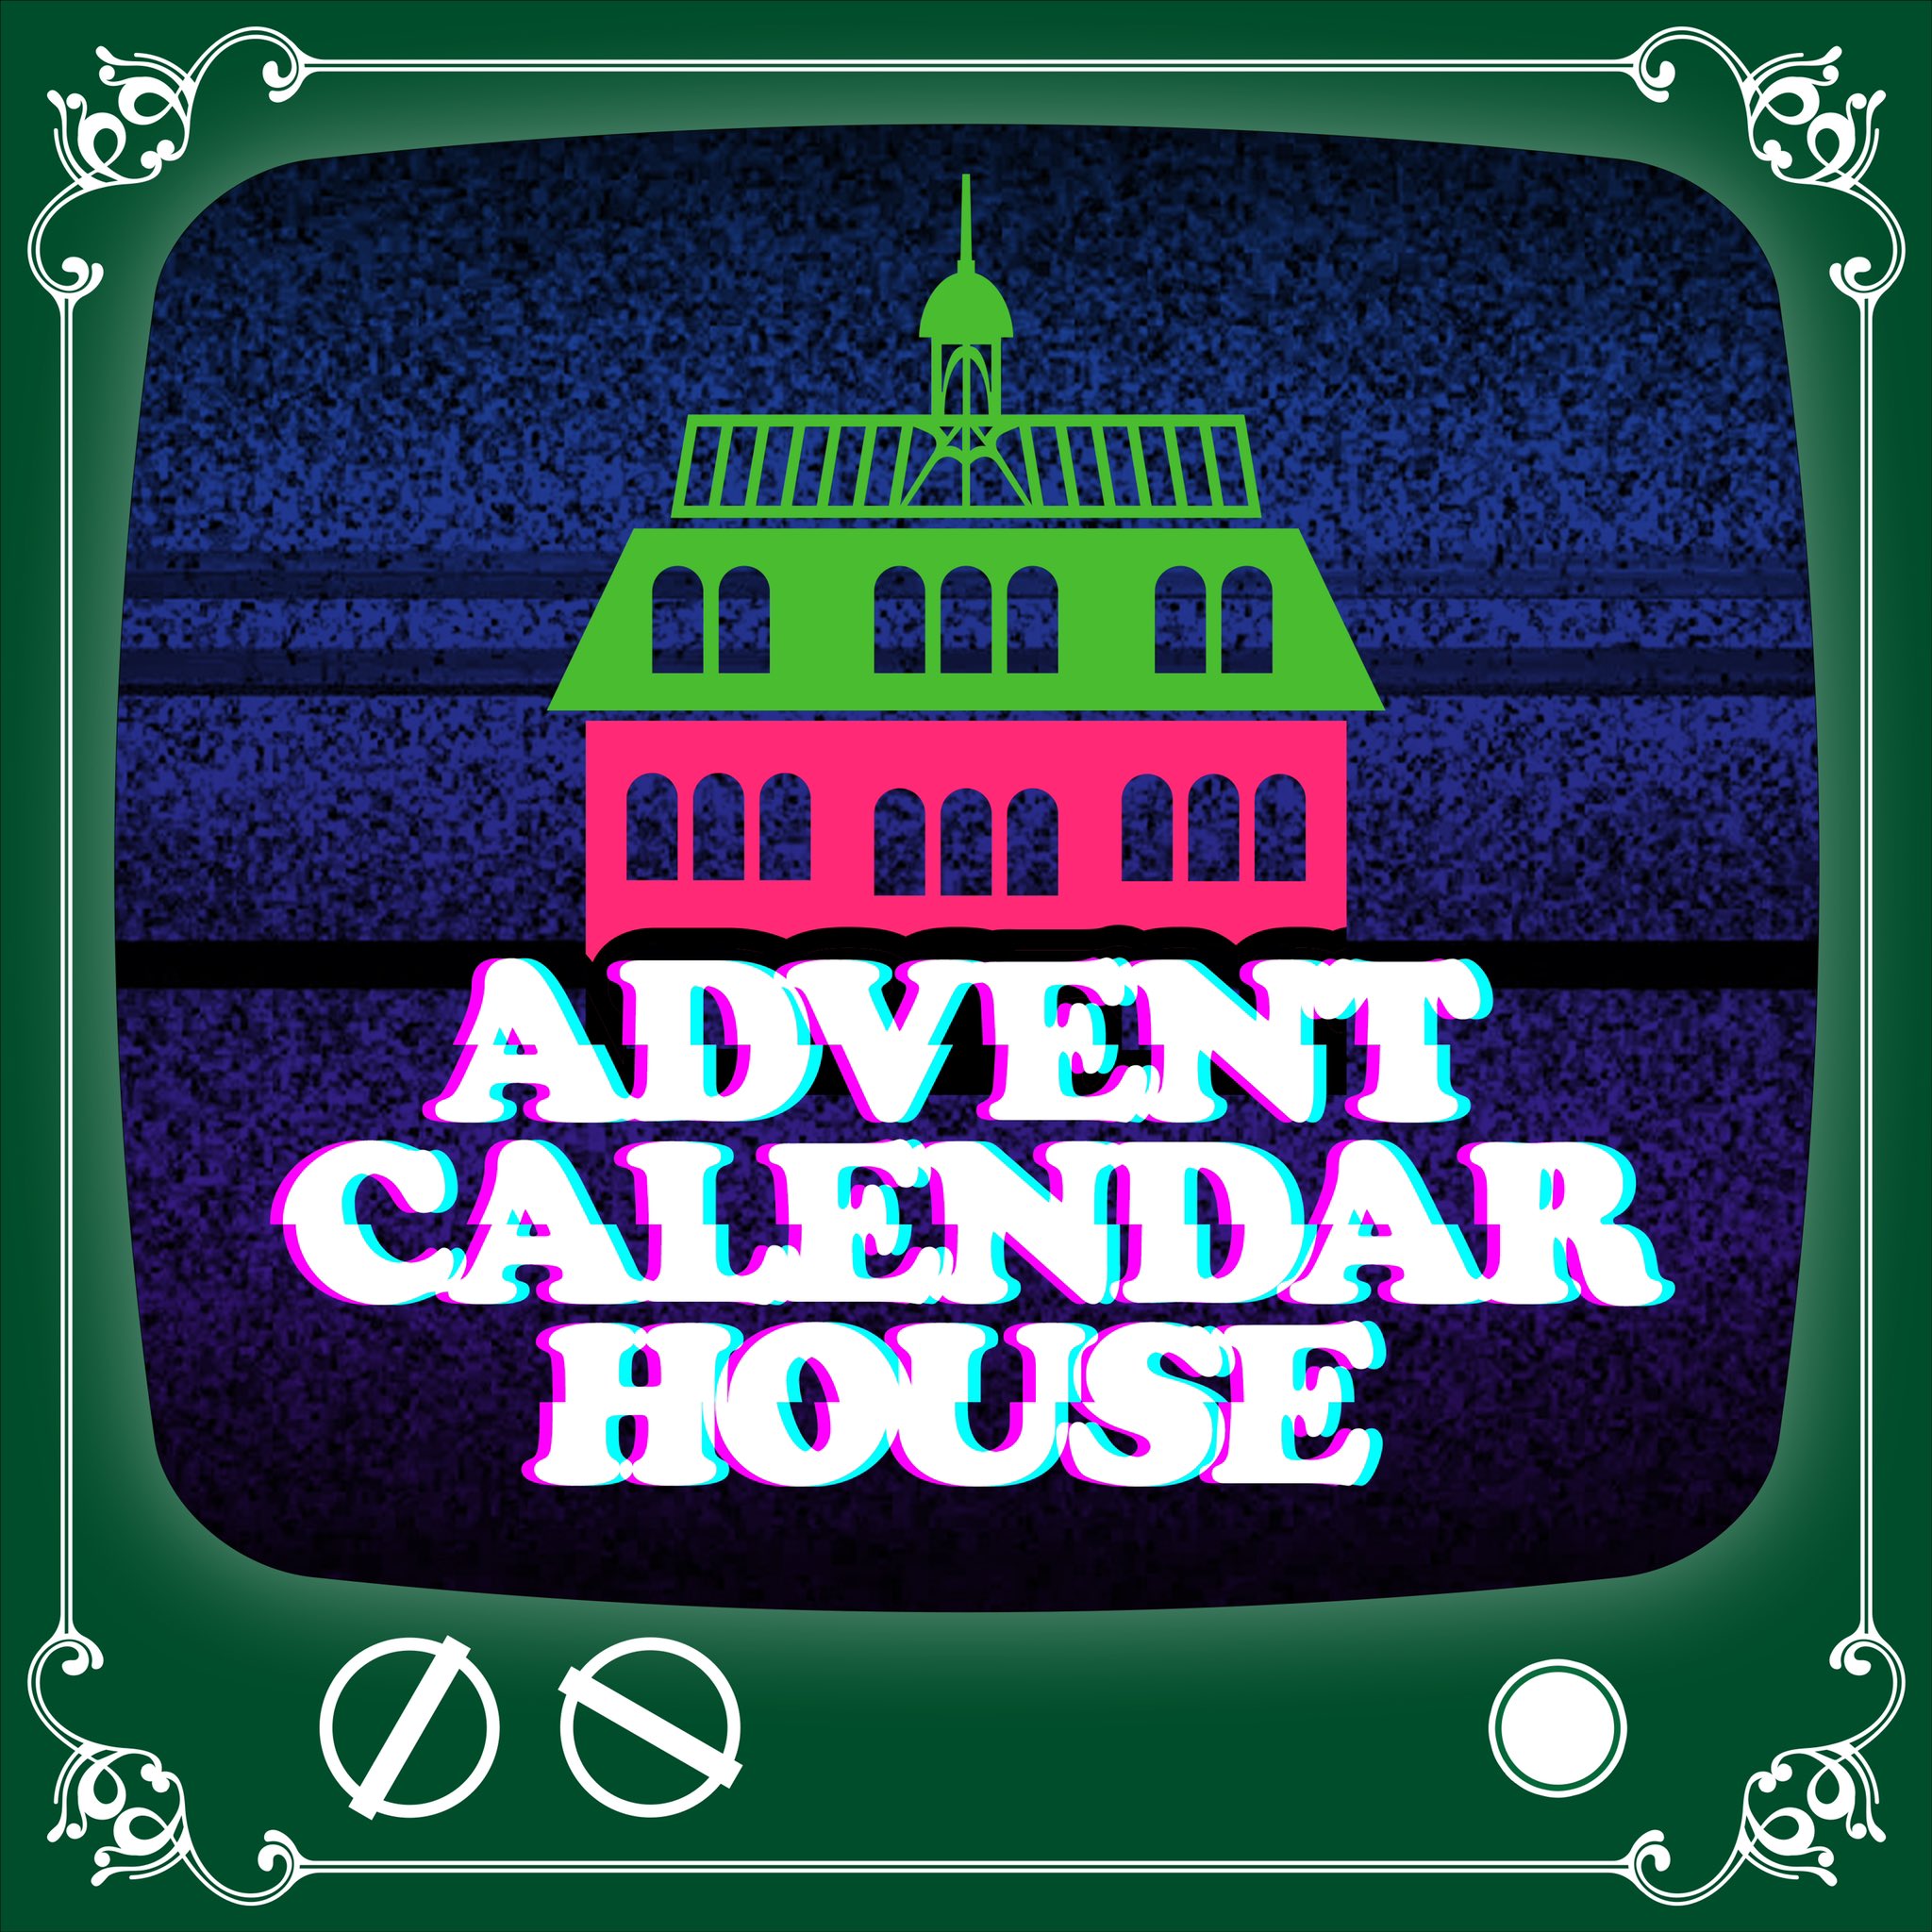 Avent Calendar House